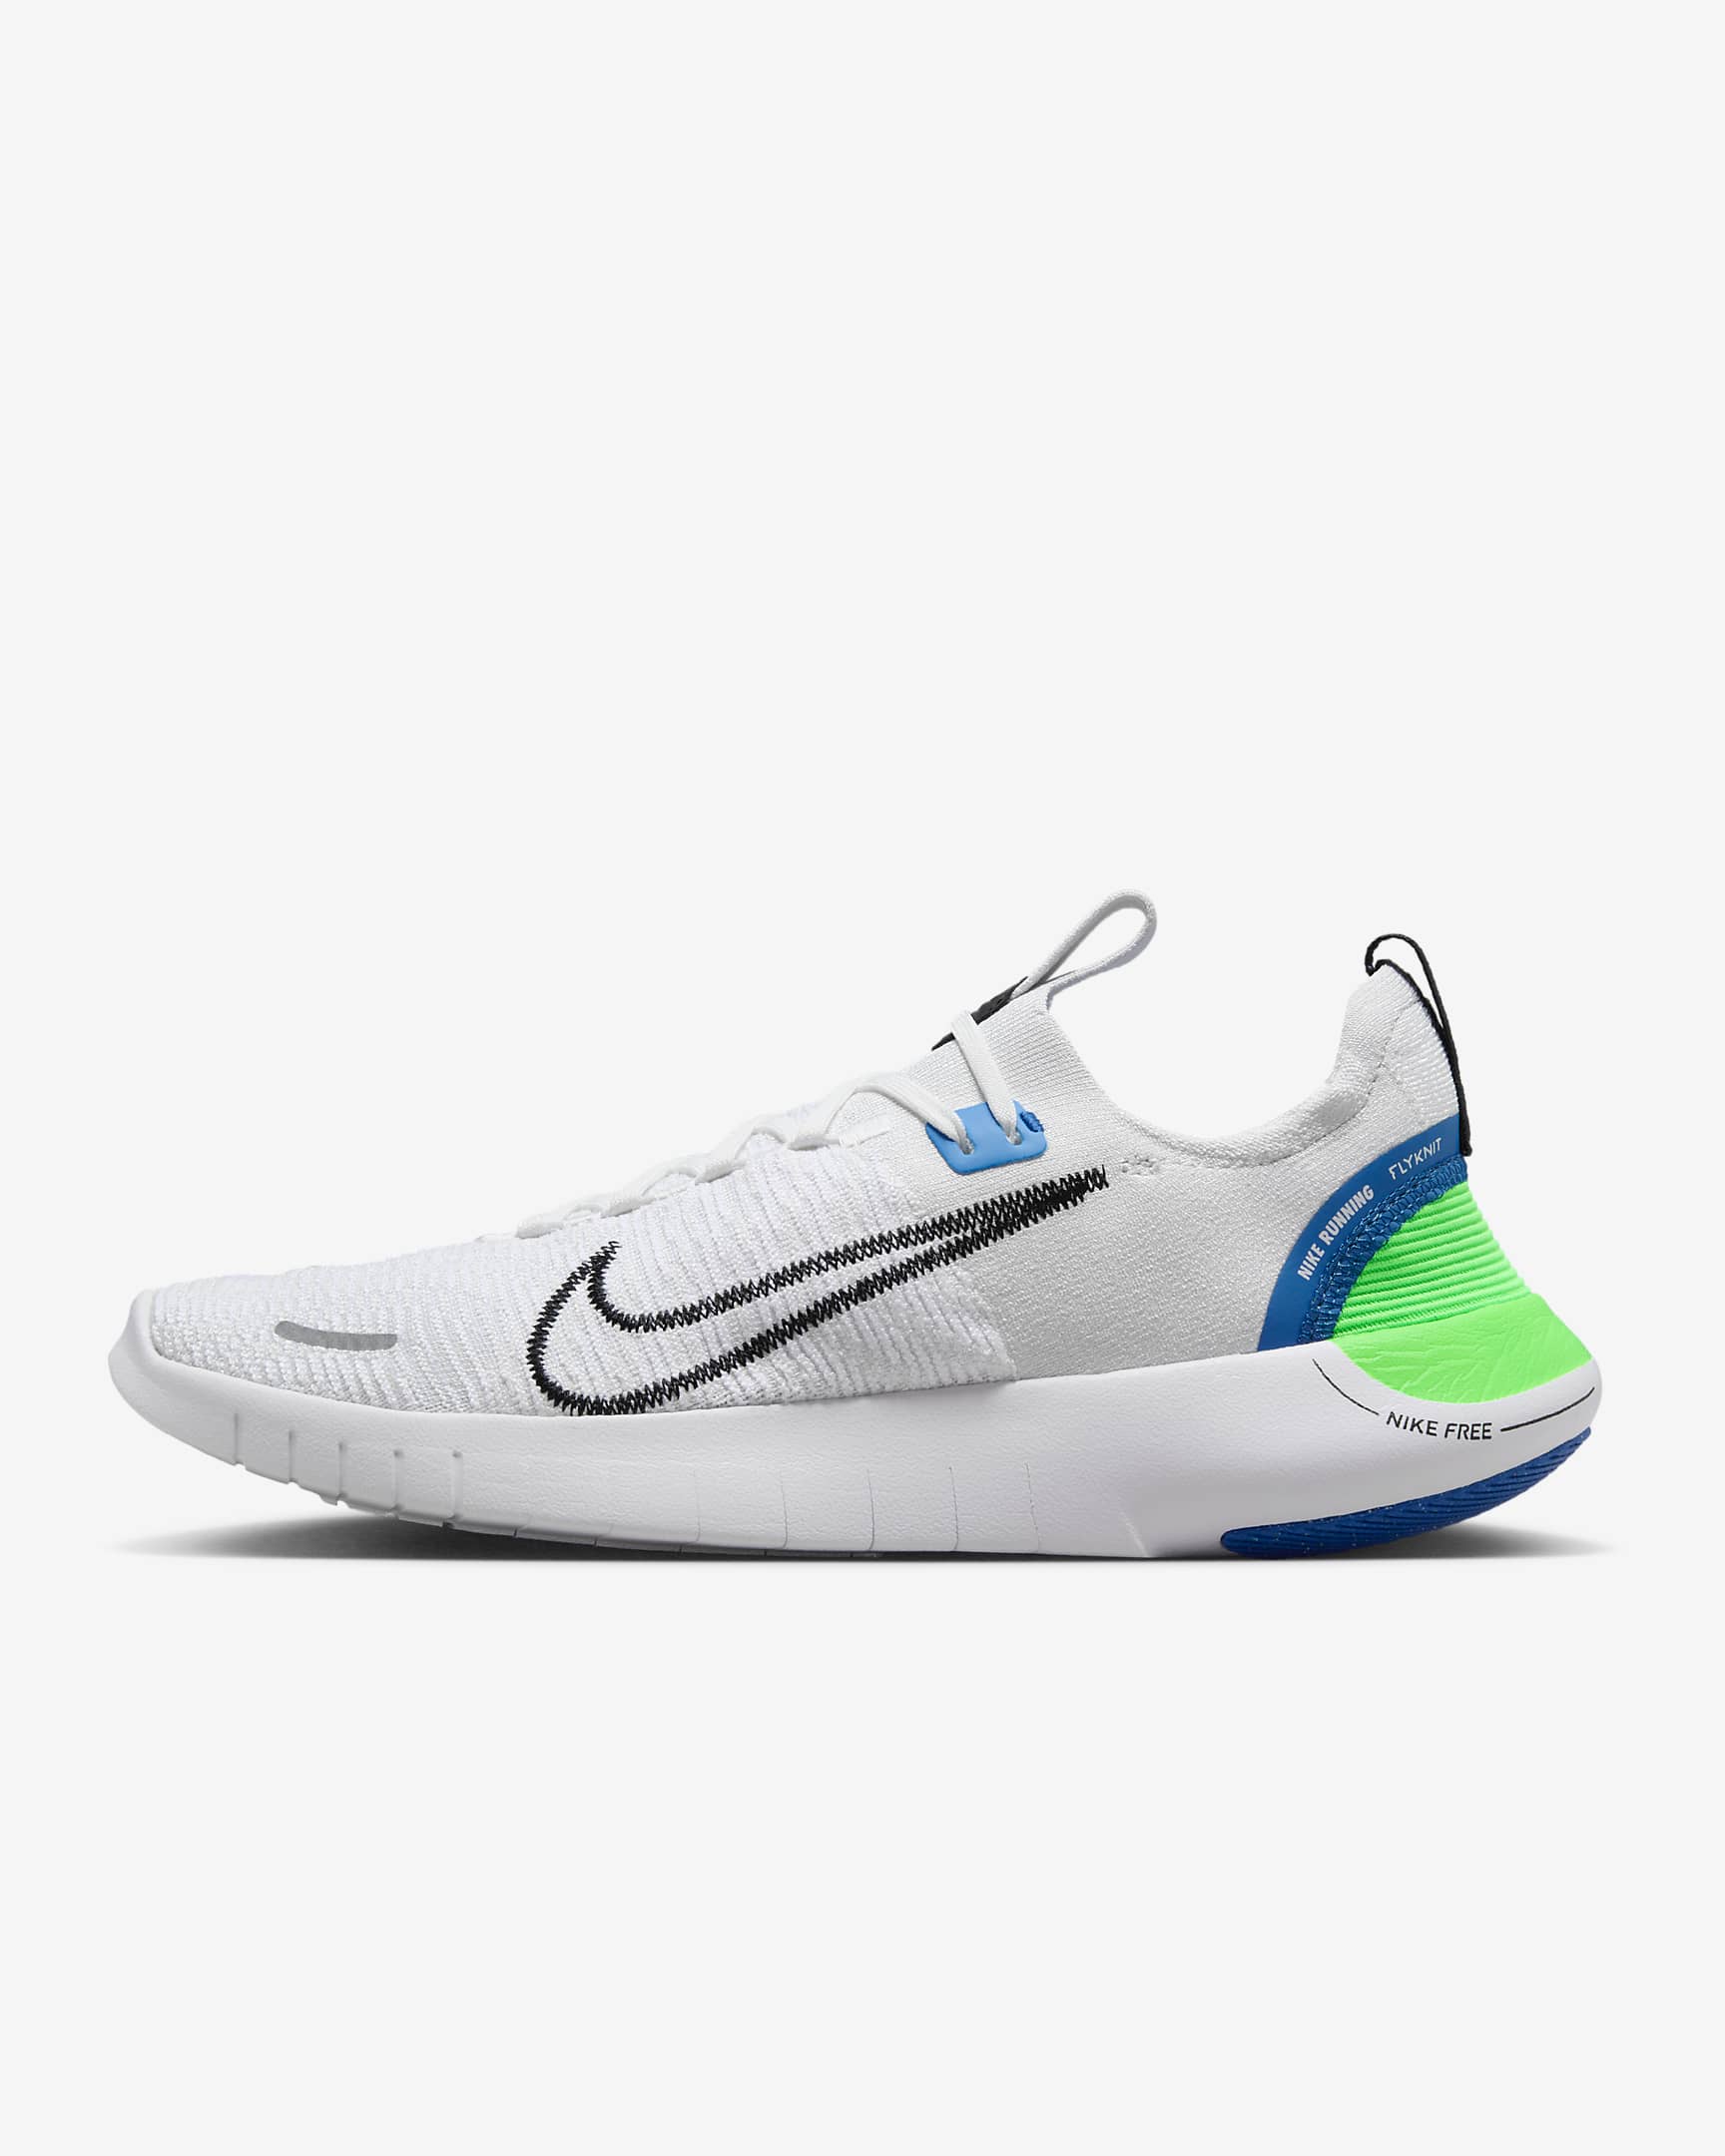 Nike Free RN NN Men's Road Running Shoes - White/Platinum Tint/Star Blue/Black